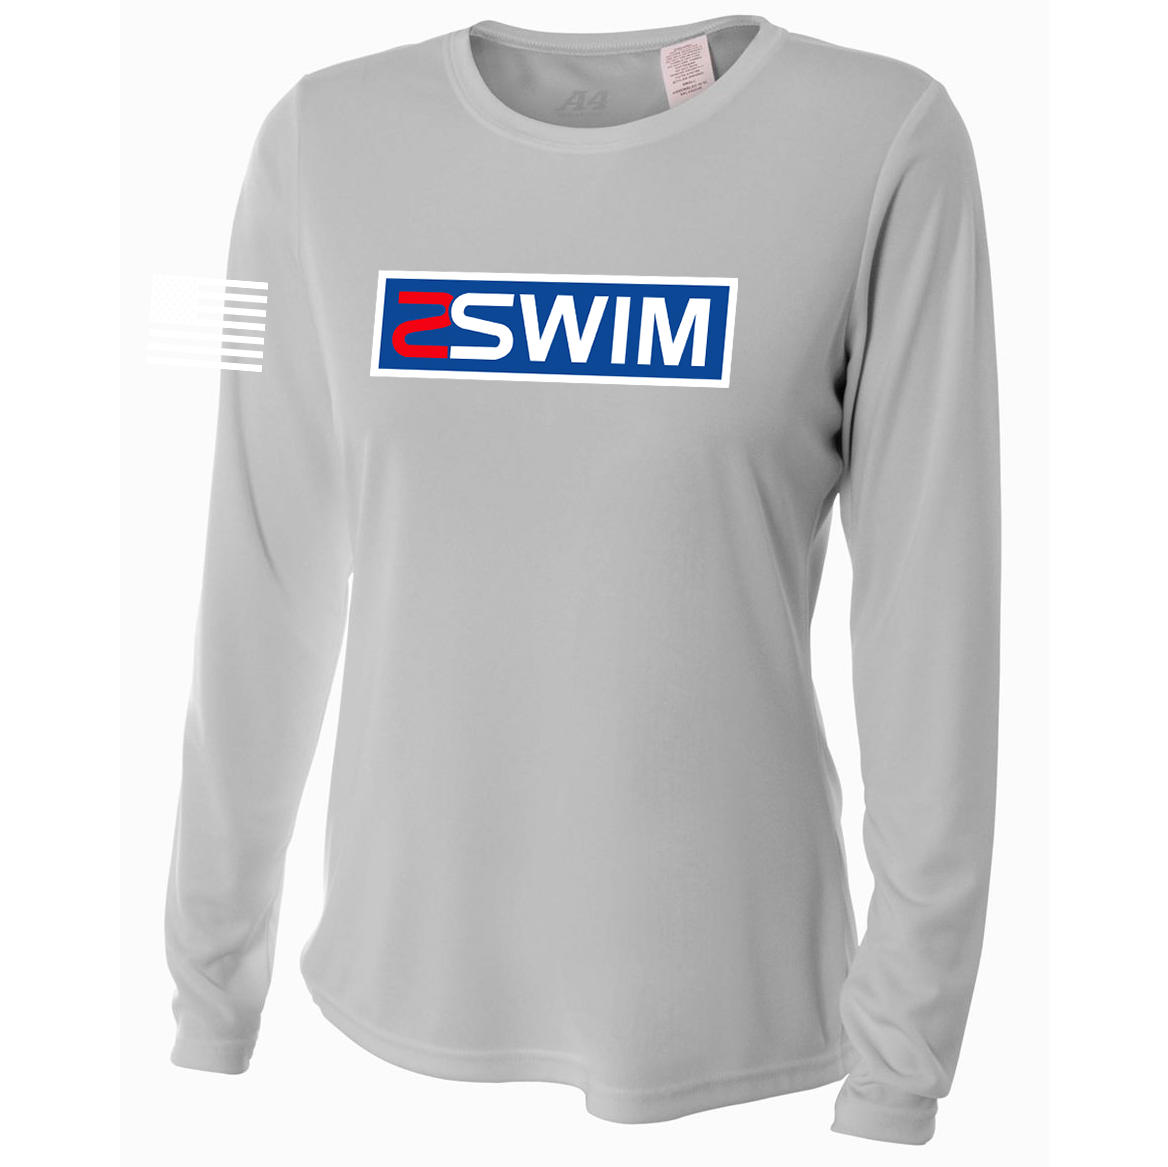 Skudin Swim A4 Women's Long Sleeve Performance Crew